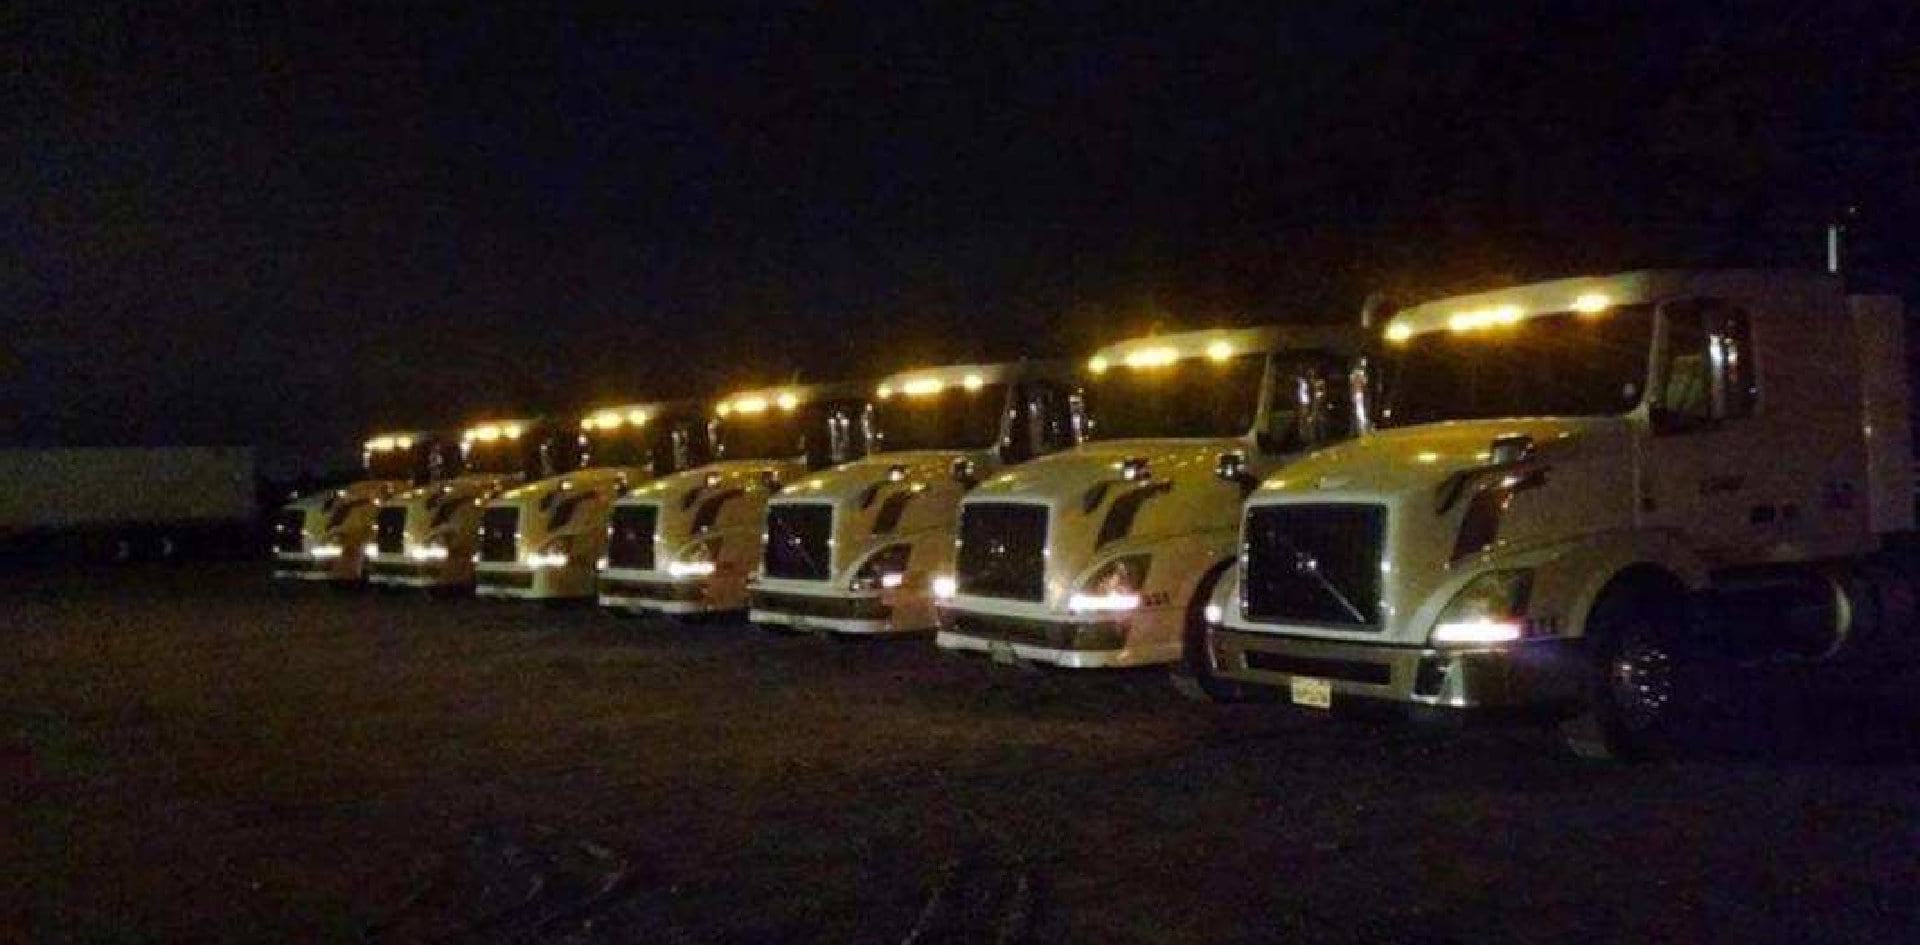 trucks at parking lot during night